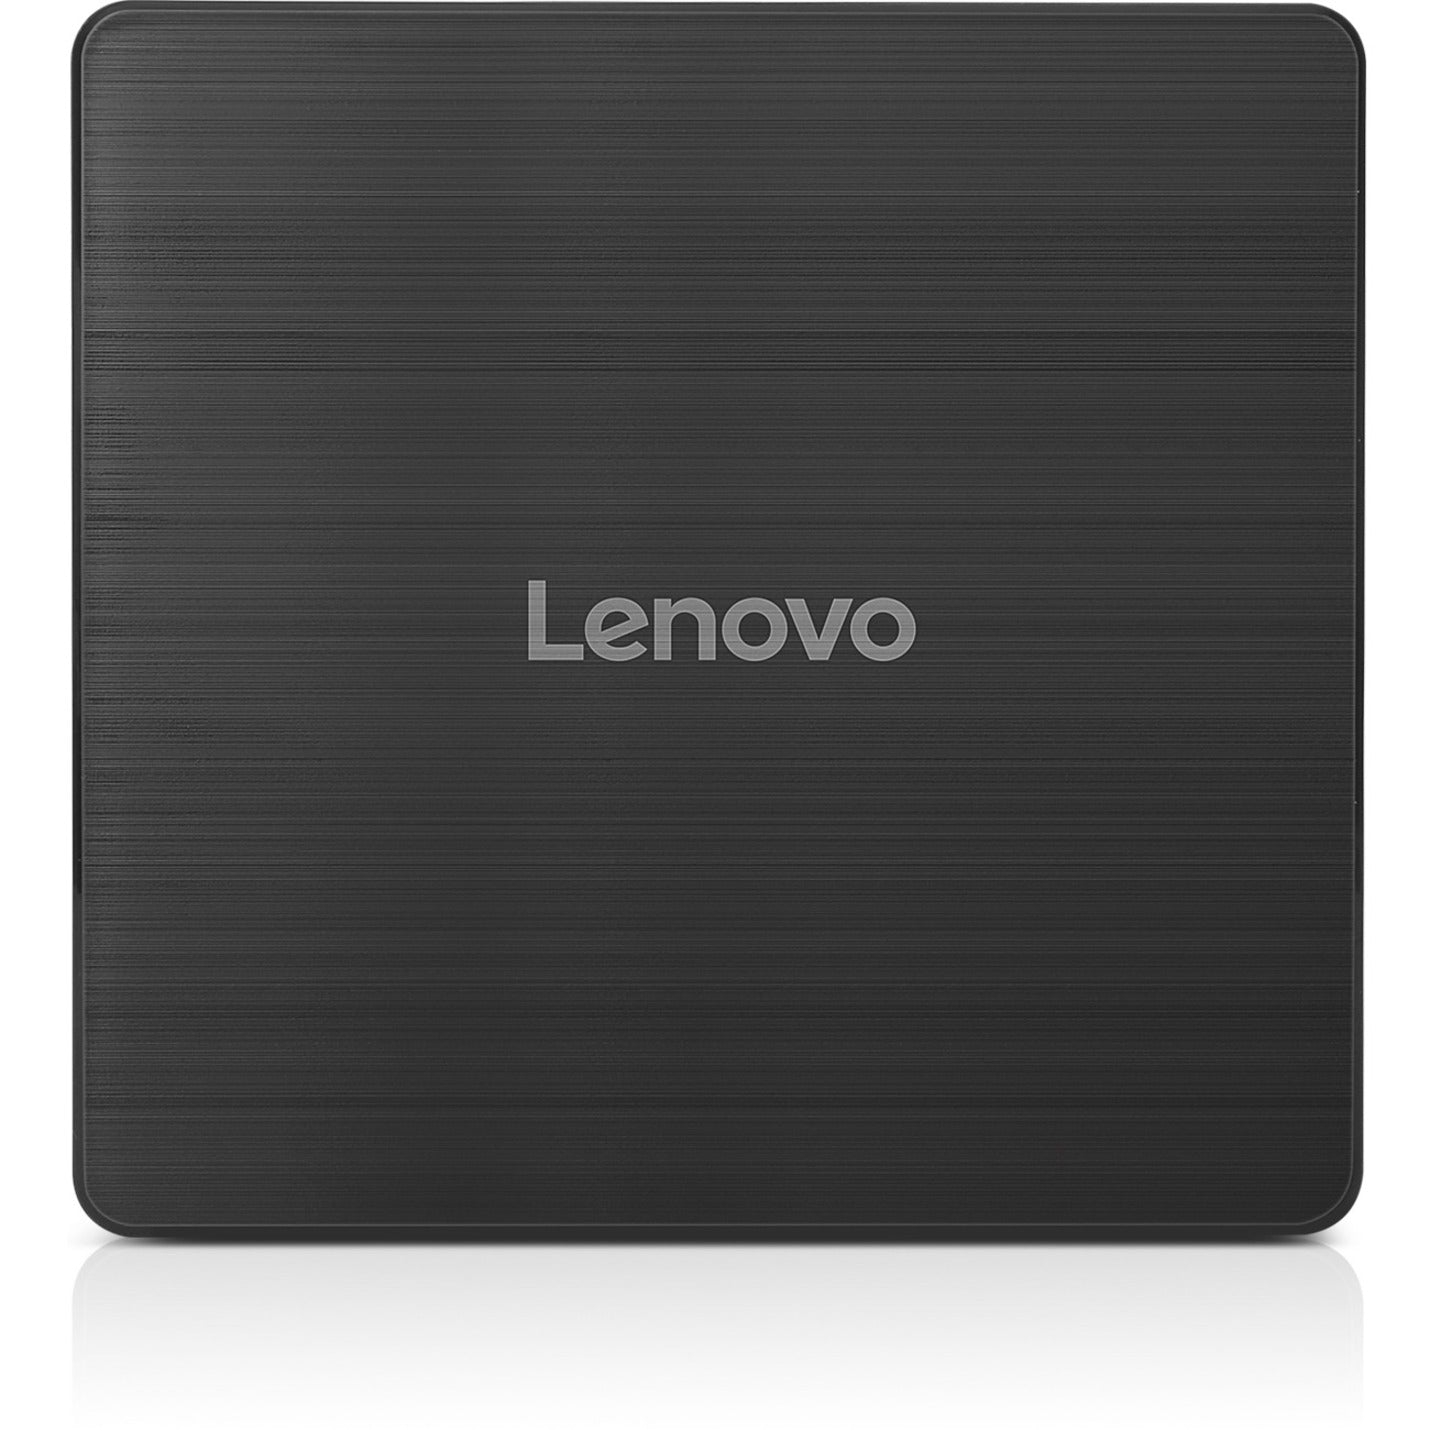 Lenovo 888015471 Slim DVD Burner DB65, Retail Pack